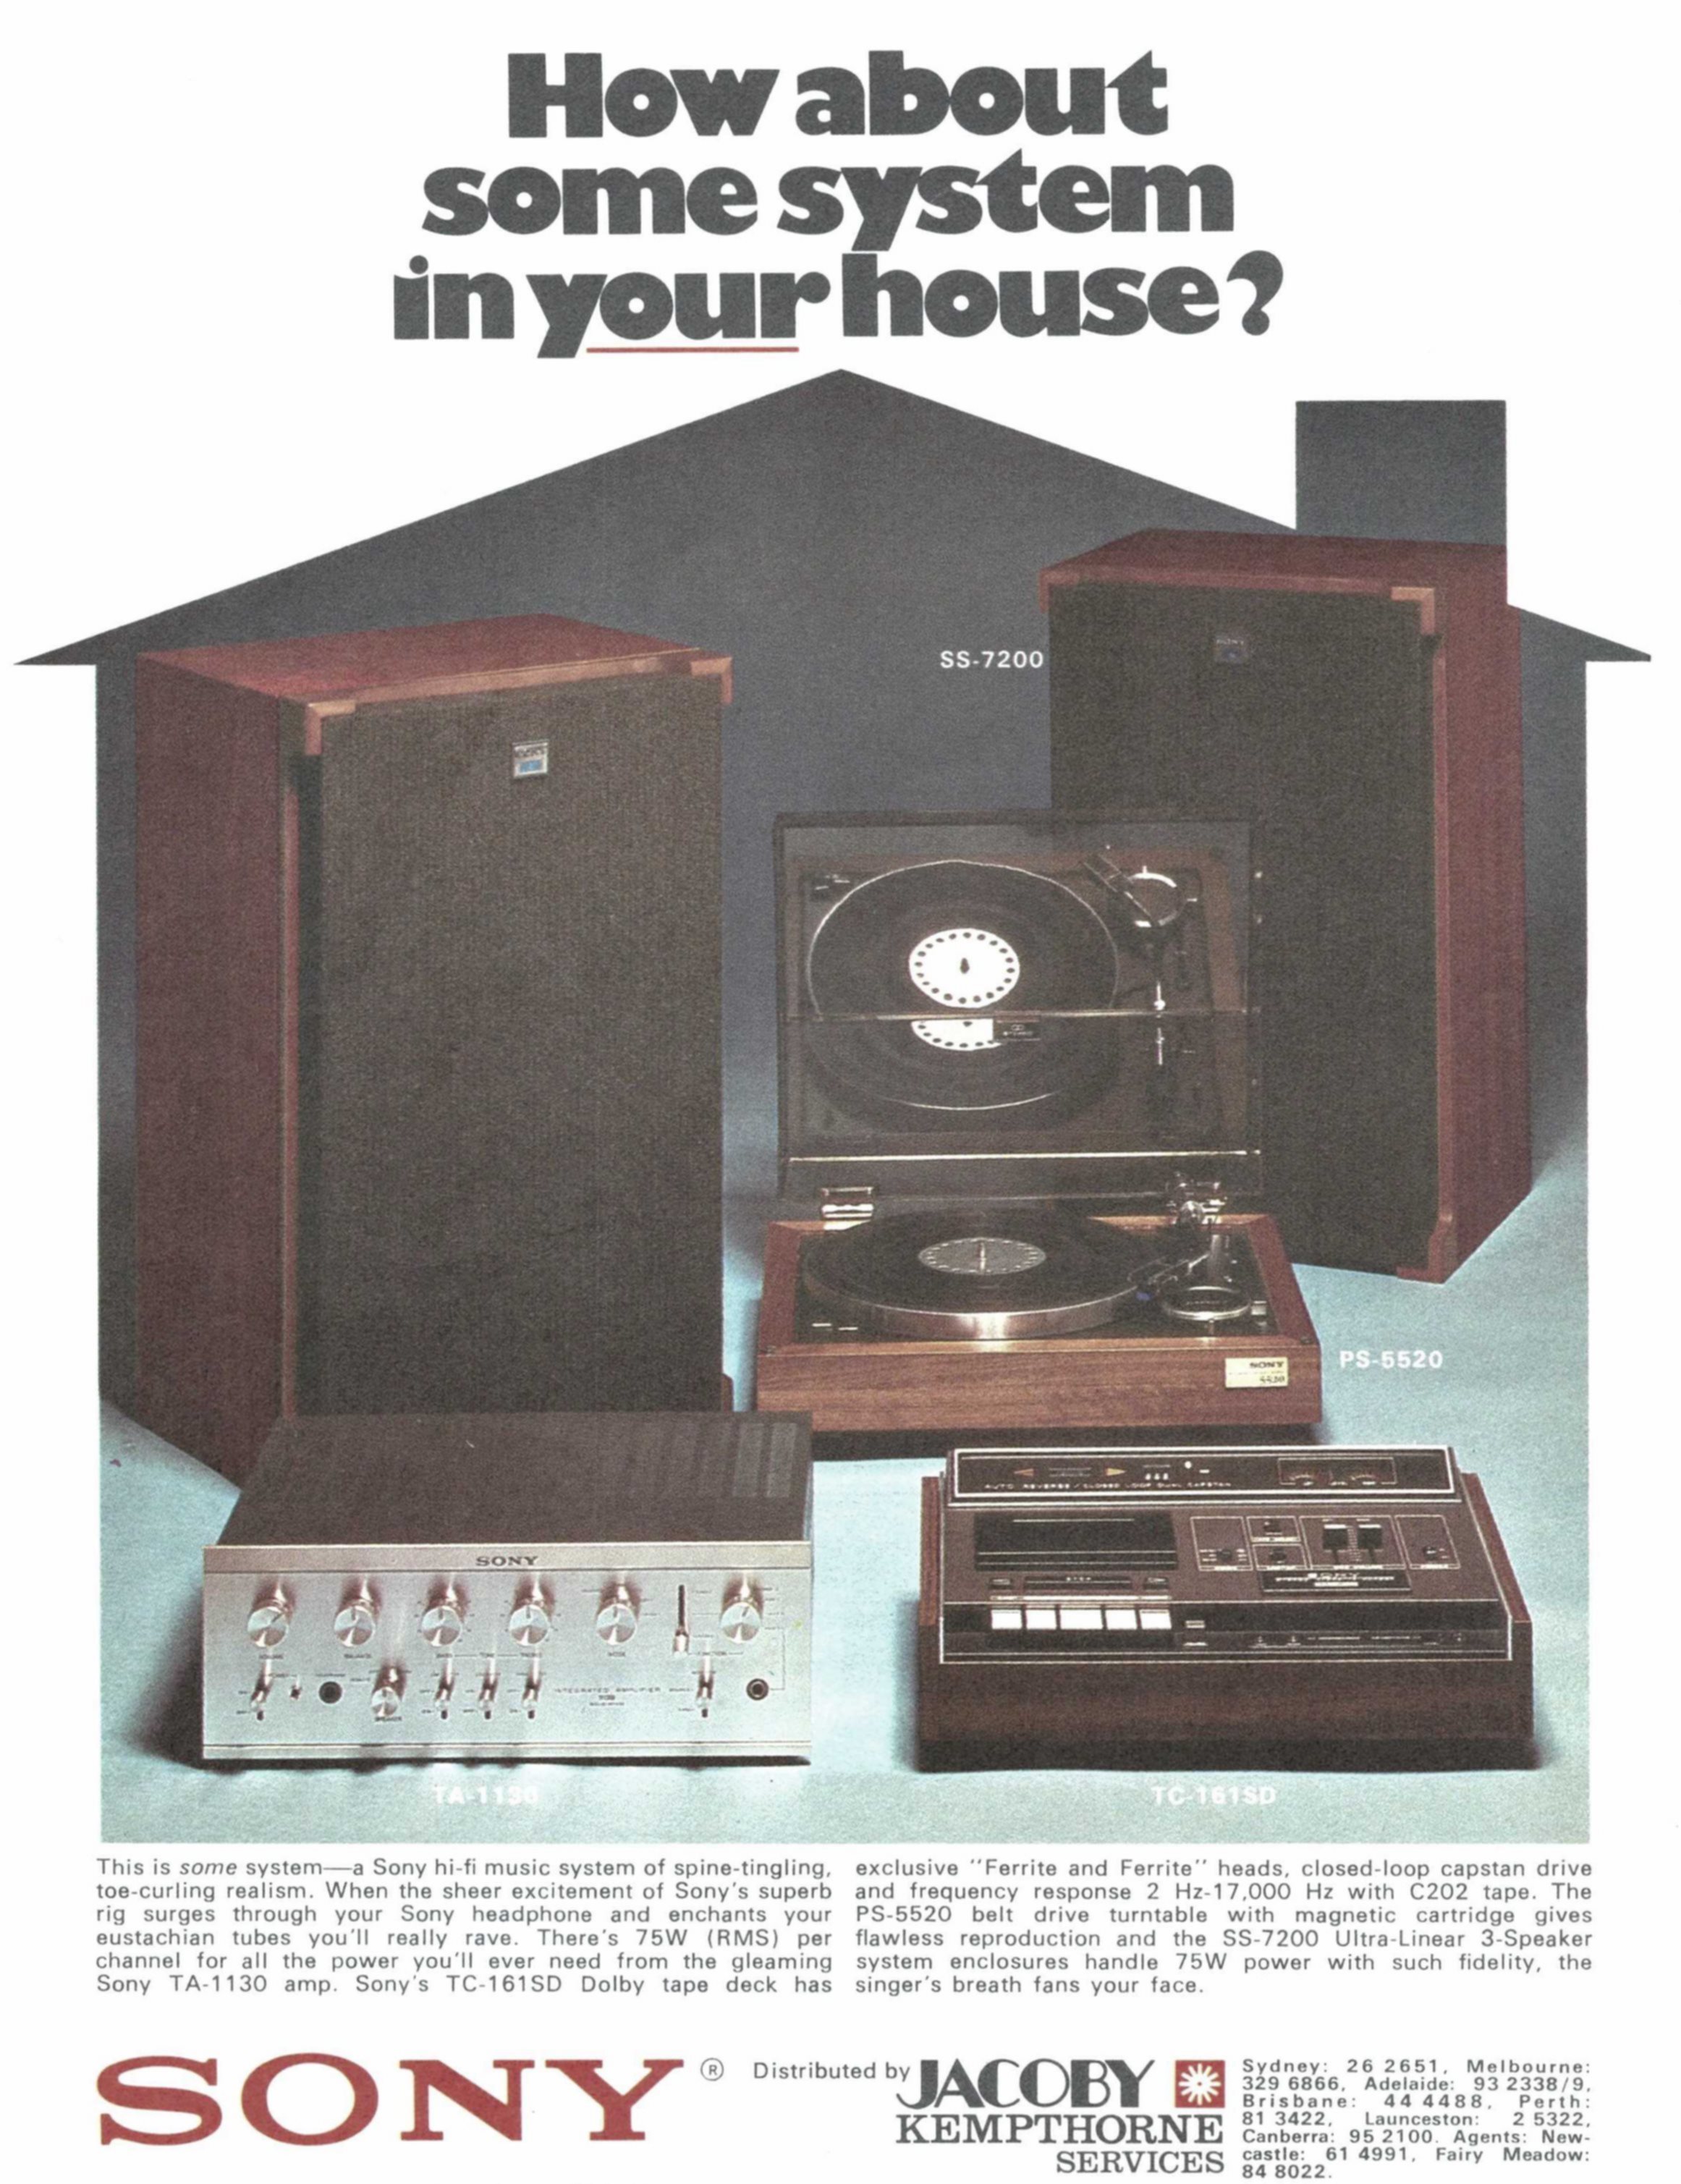 Sony 1973 66.jpg